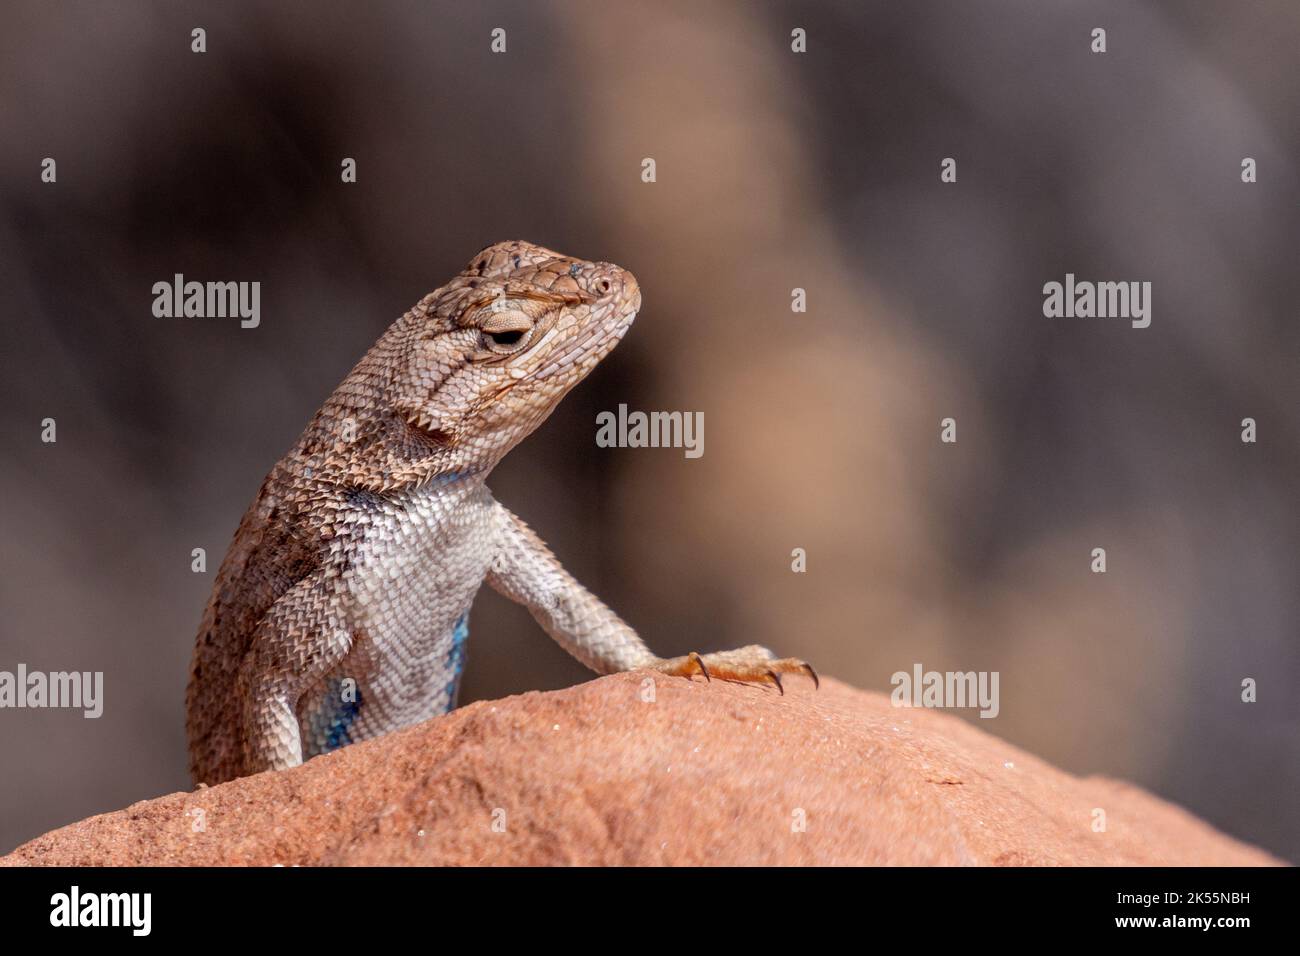 A closeup of Sagebrush lizard on a rock on blur background Stock Photo